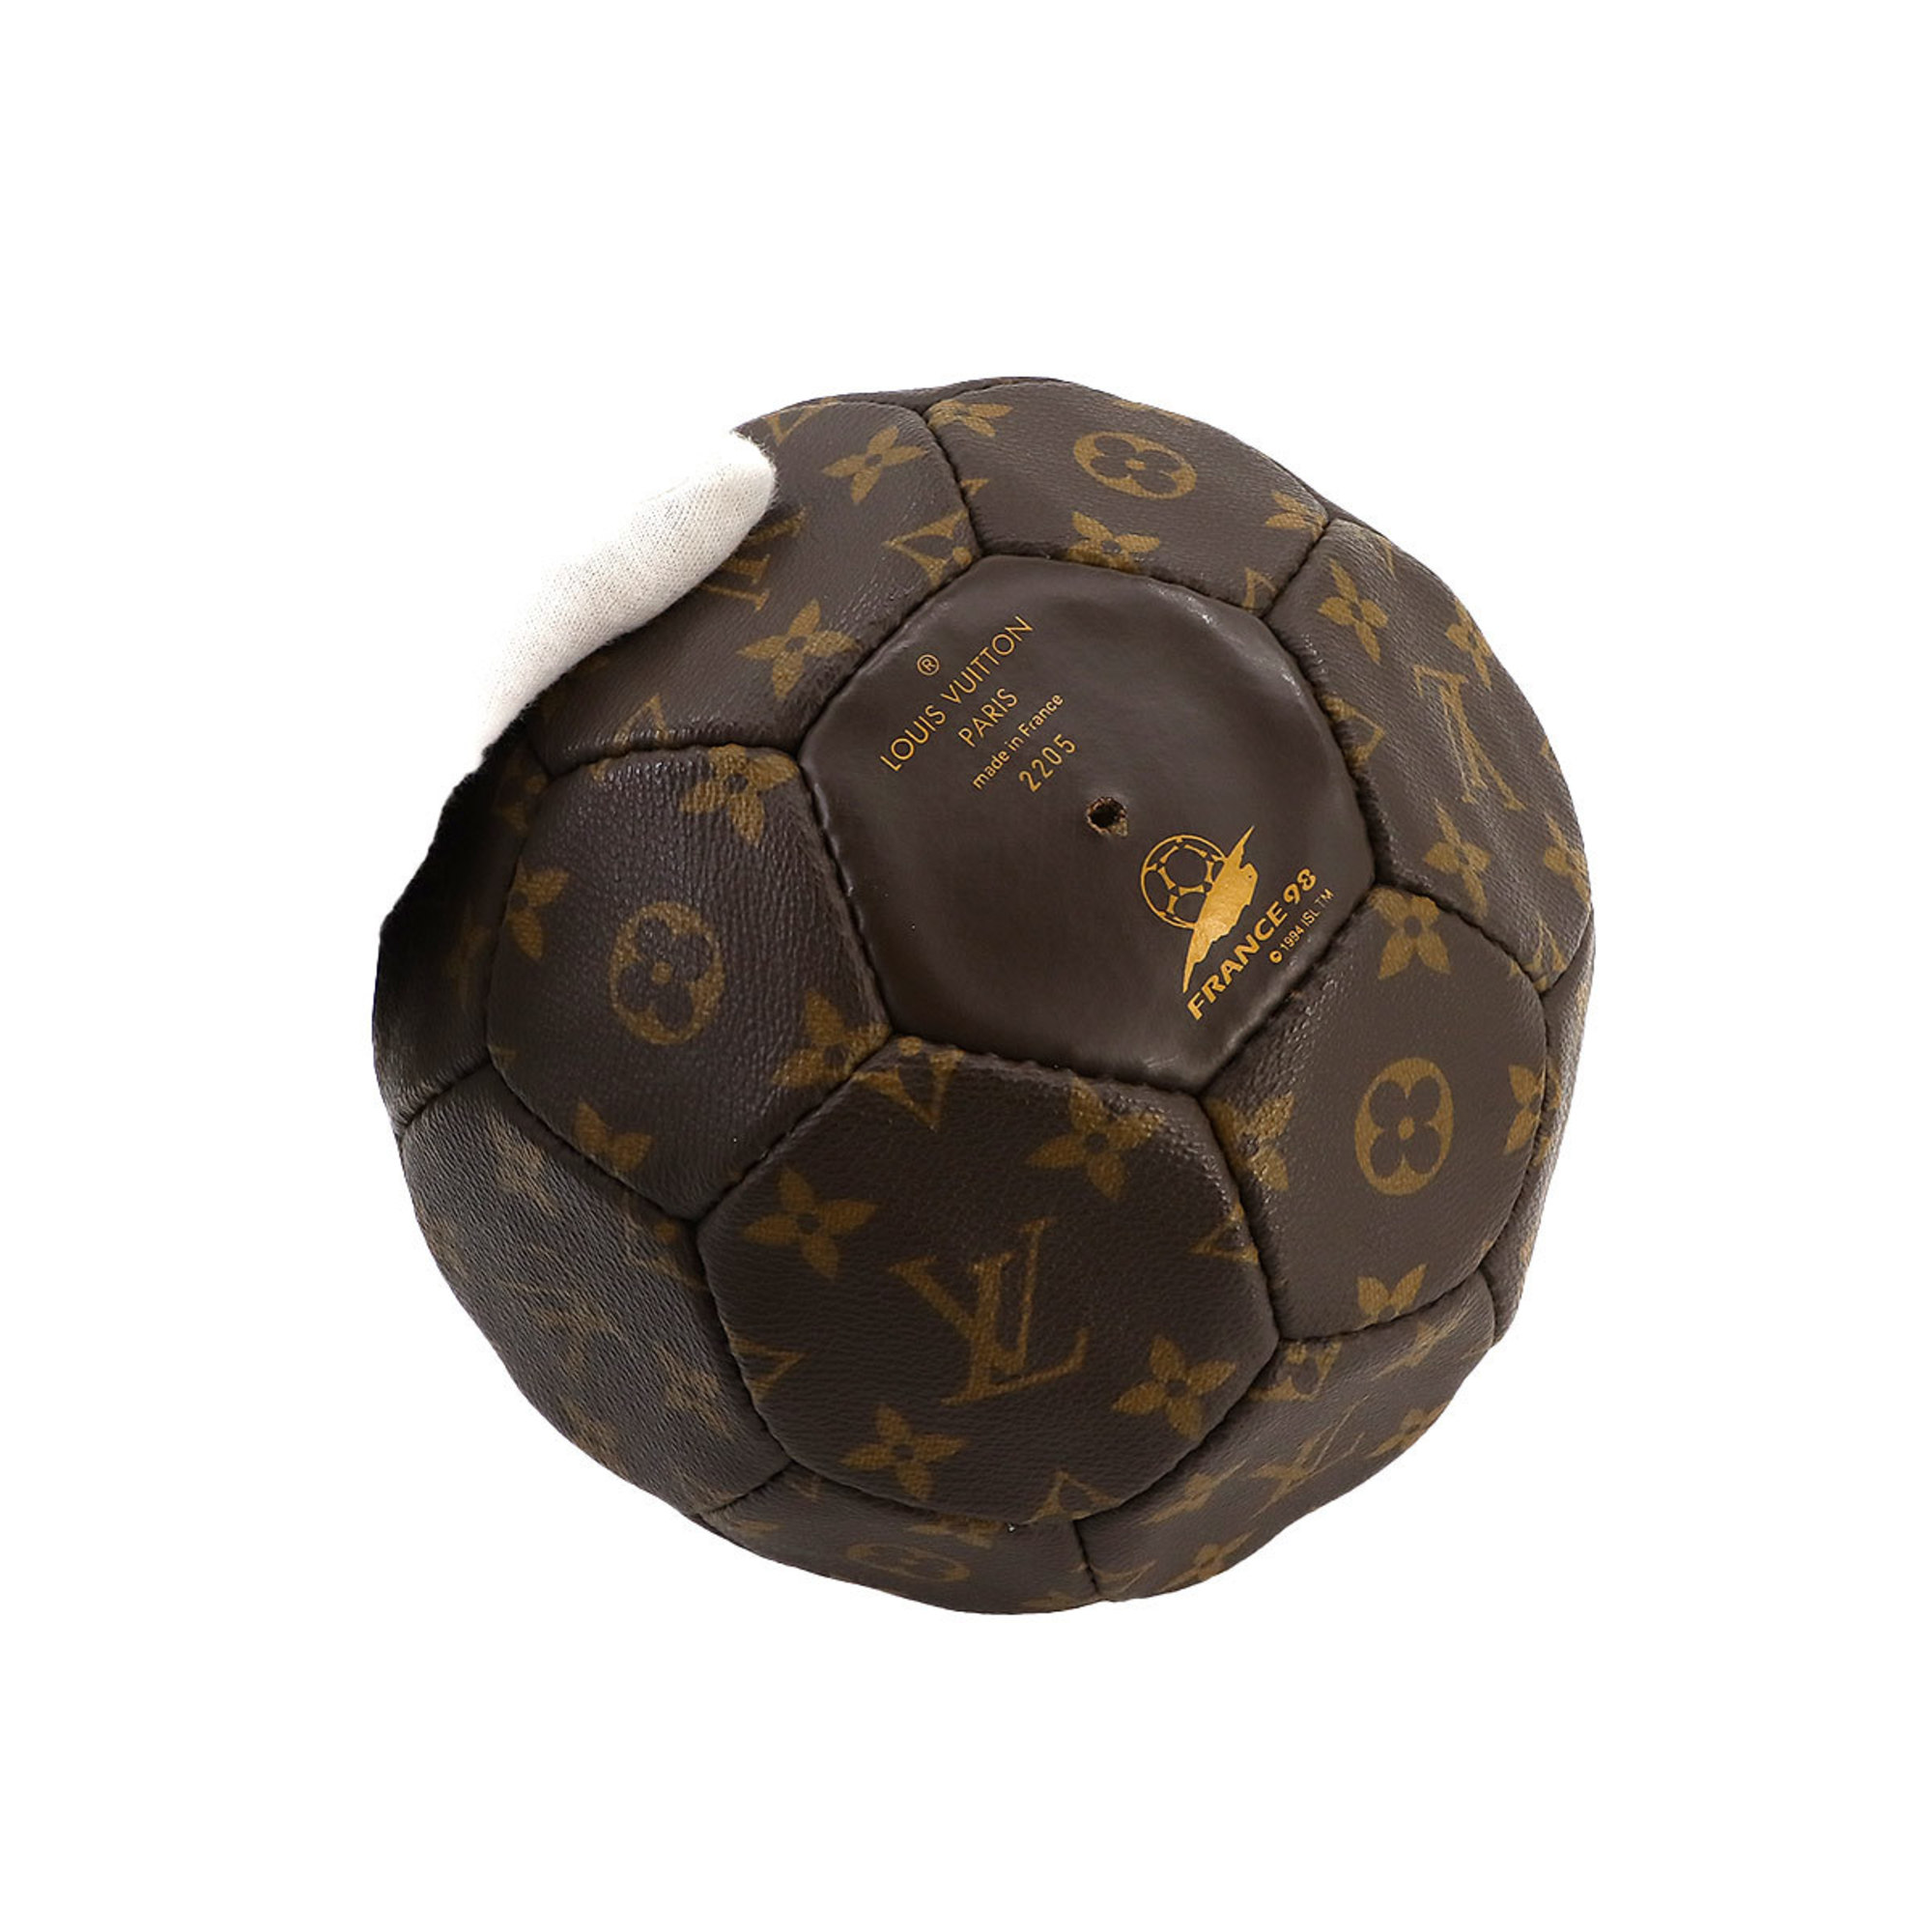 Louis Vuitton LOUIS VUITTON Monogram Soccer Ball France World Cup Commemorative Limited Edition M99054